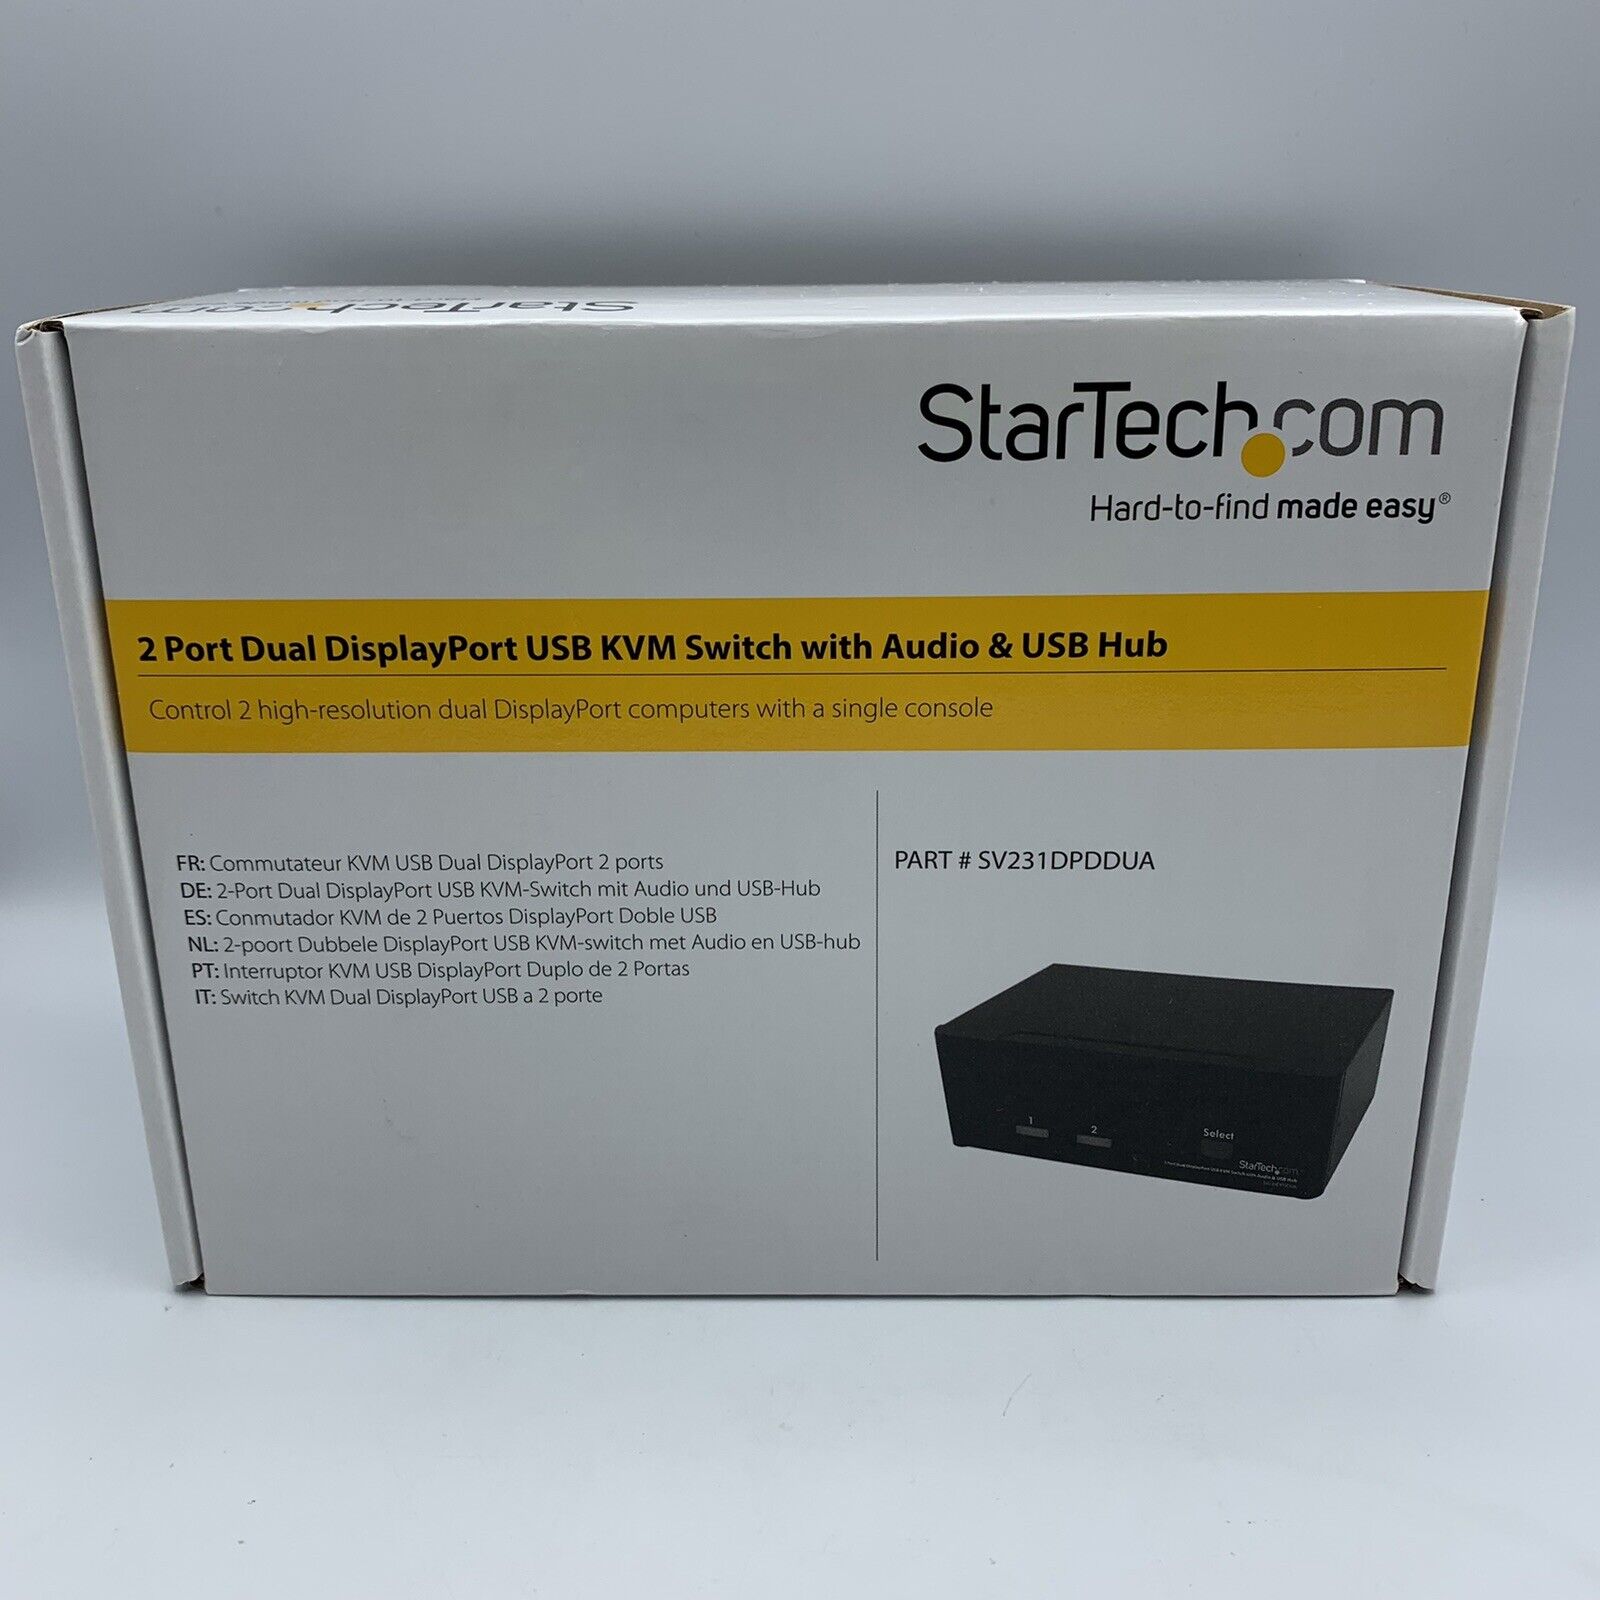 StarTech.com 2 Port Dual Display Port USB KVM Switch W/ Audio & USB Hub Open Box